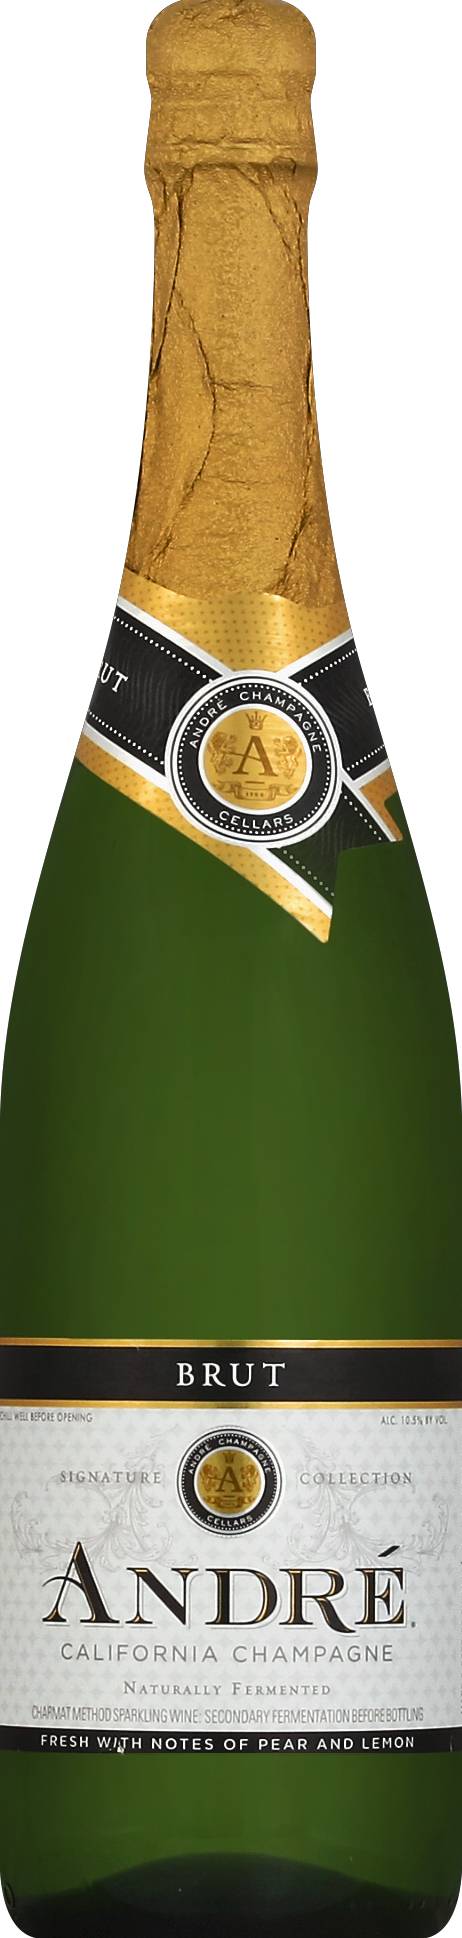 Andre Brut Champagne Wine (750 ml)